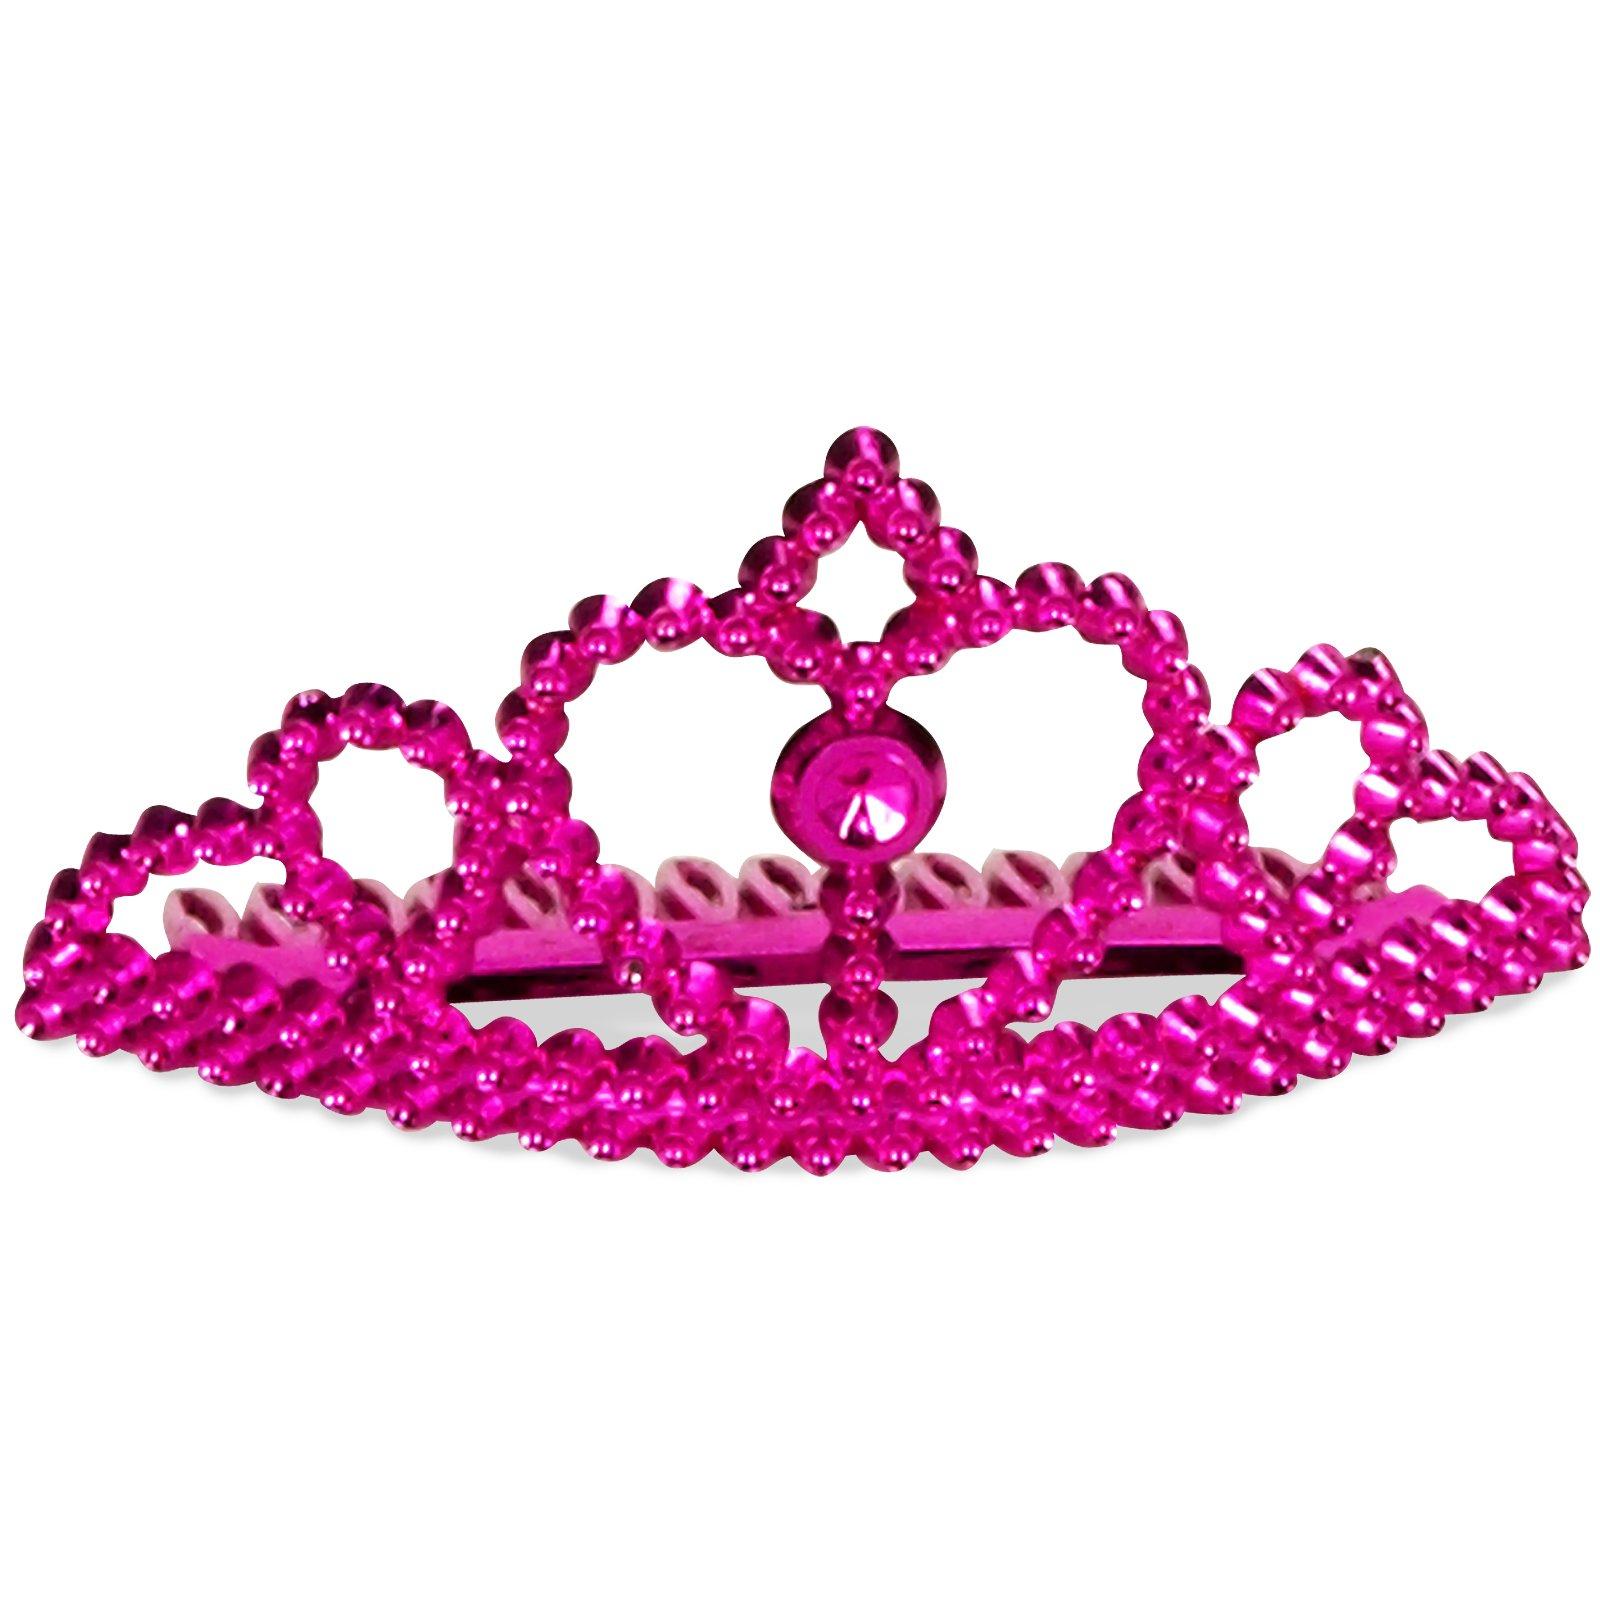 Tiara queen crown clip art free clipart image 